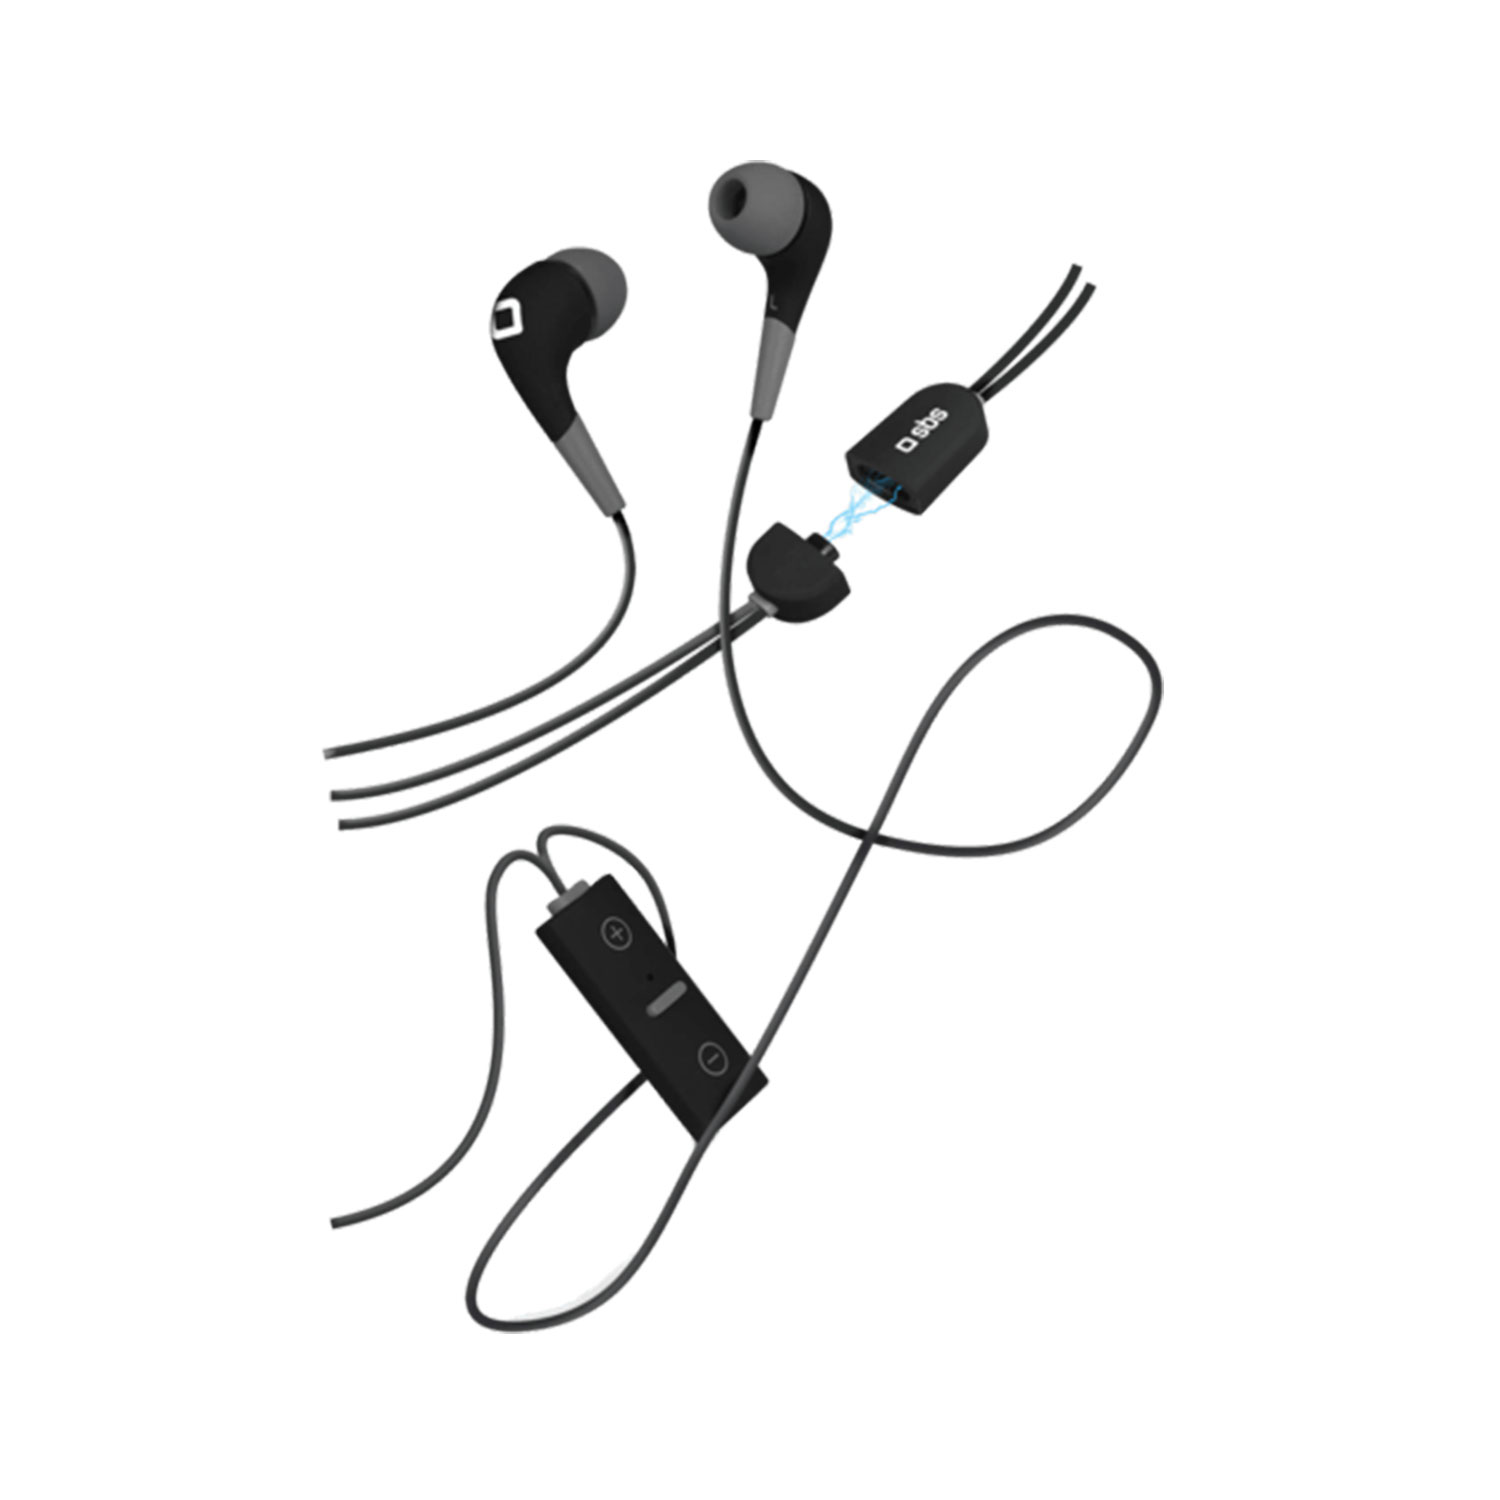 sbs 'In-Ear Bluethooth-Headset mit Magnetverschluss